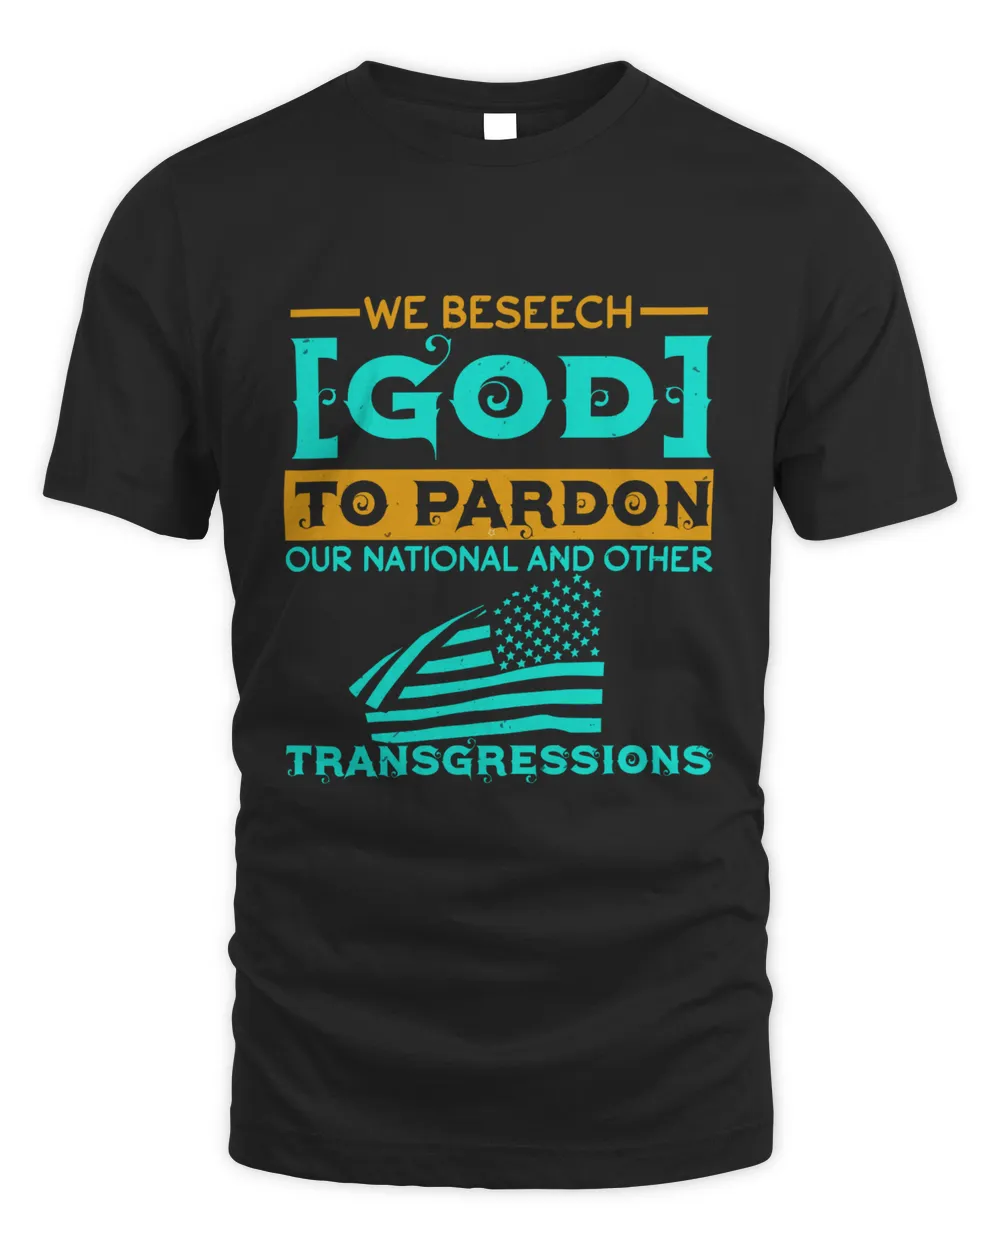 We beseech [God] to pardon-01